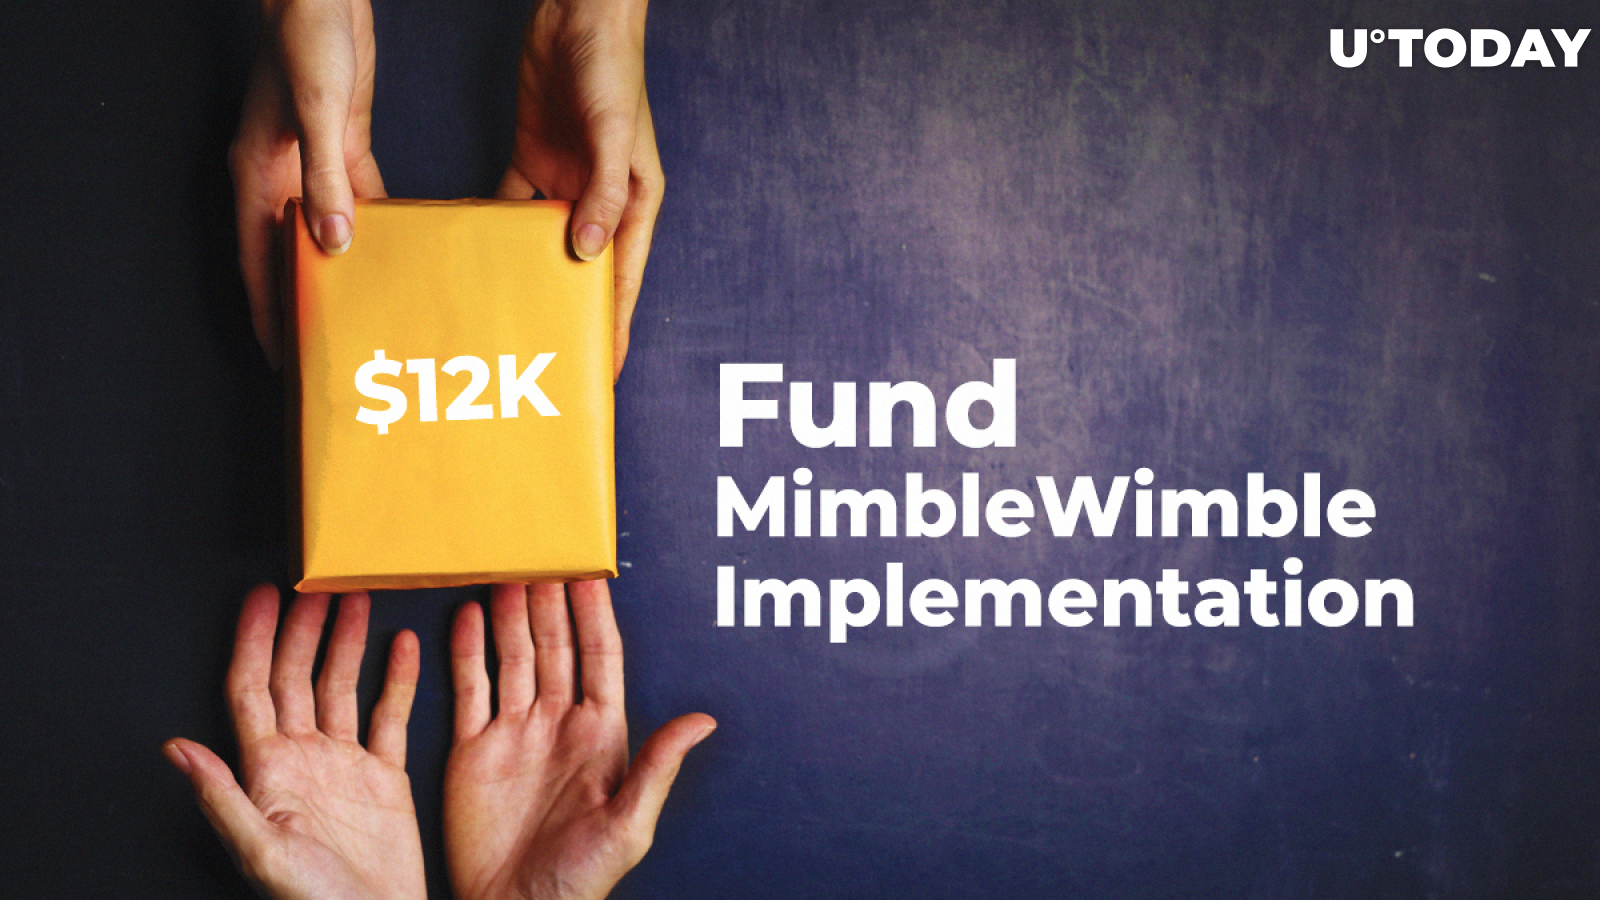 Litecoin (LTC) Community Managed to Raise $12K to Fund MimbleWimble Implementation